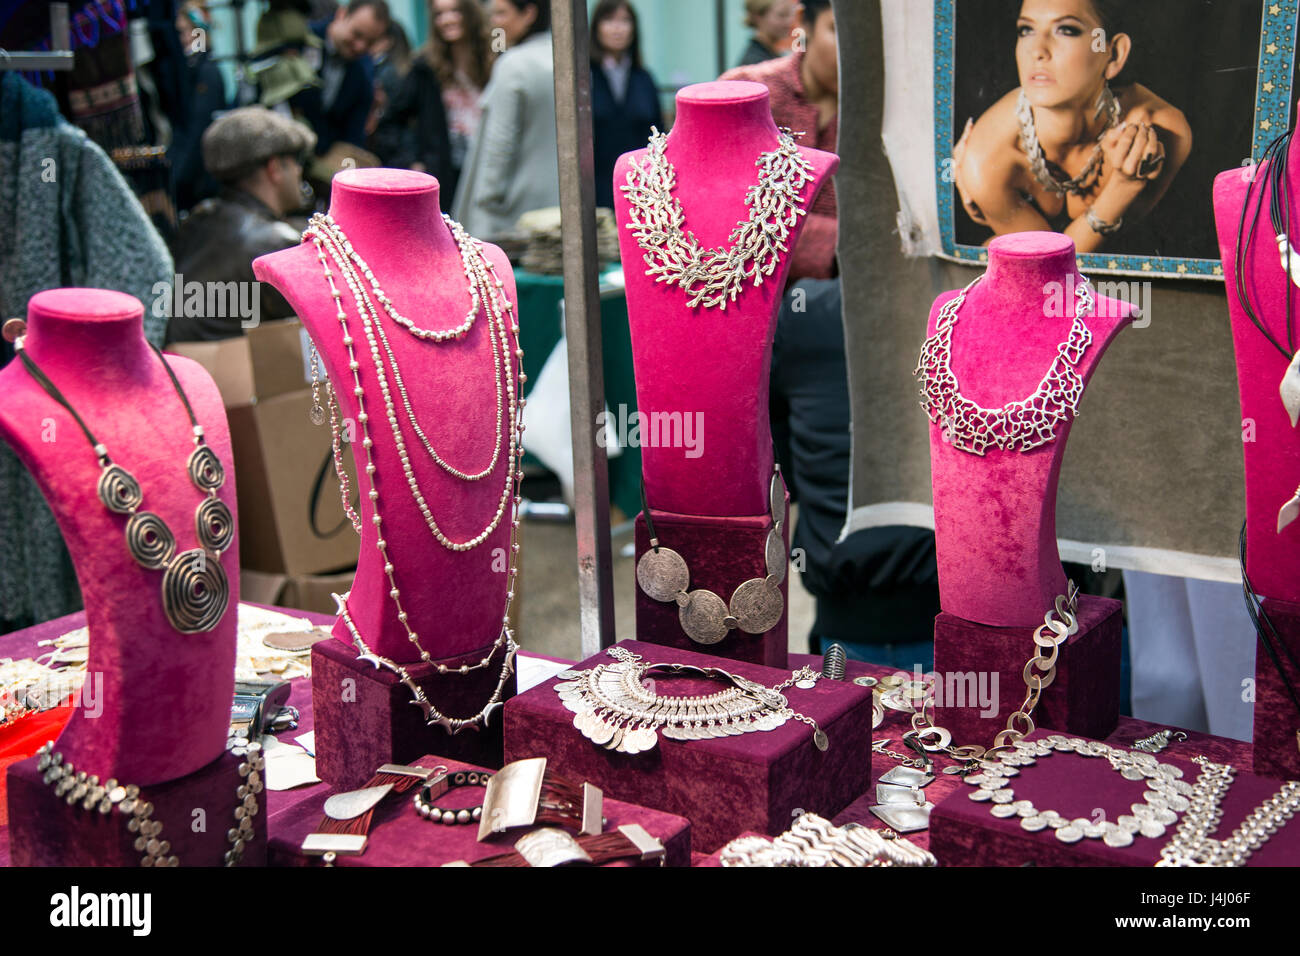 Jewellery stall at Spitalfields Market, London, UK Stock Photo